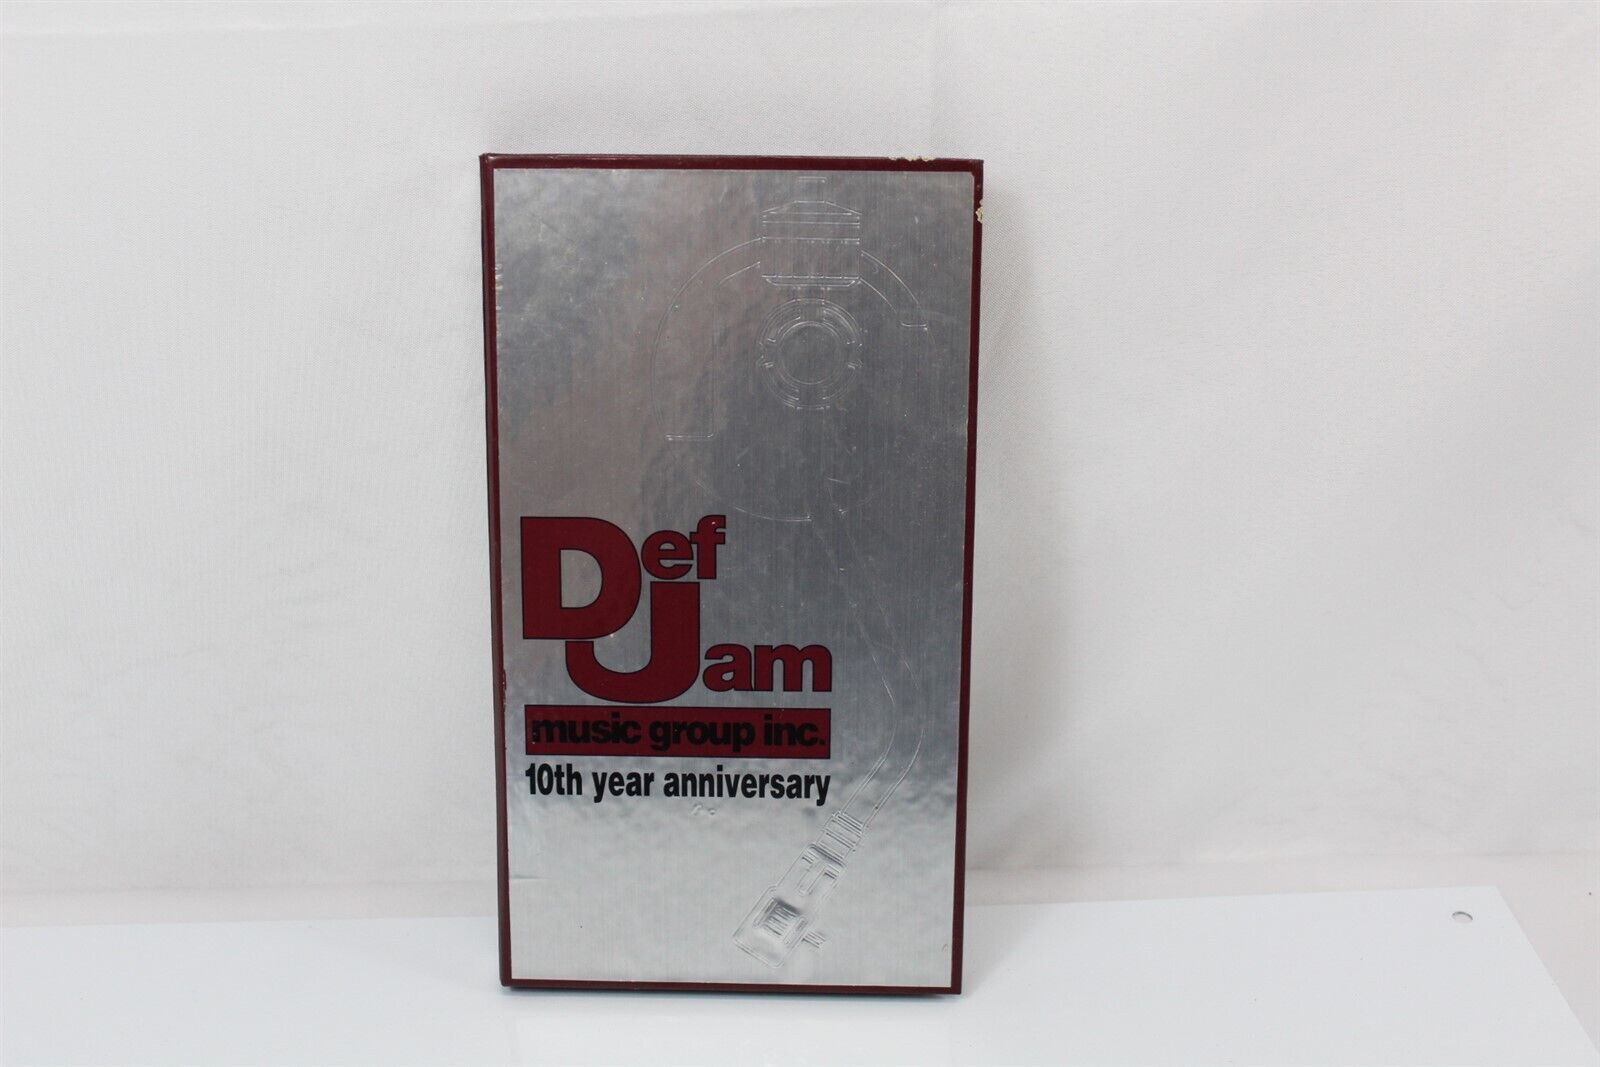  1995 Def Jam Music Group 4 CD Box Set 10th Anniversary Vintage